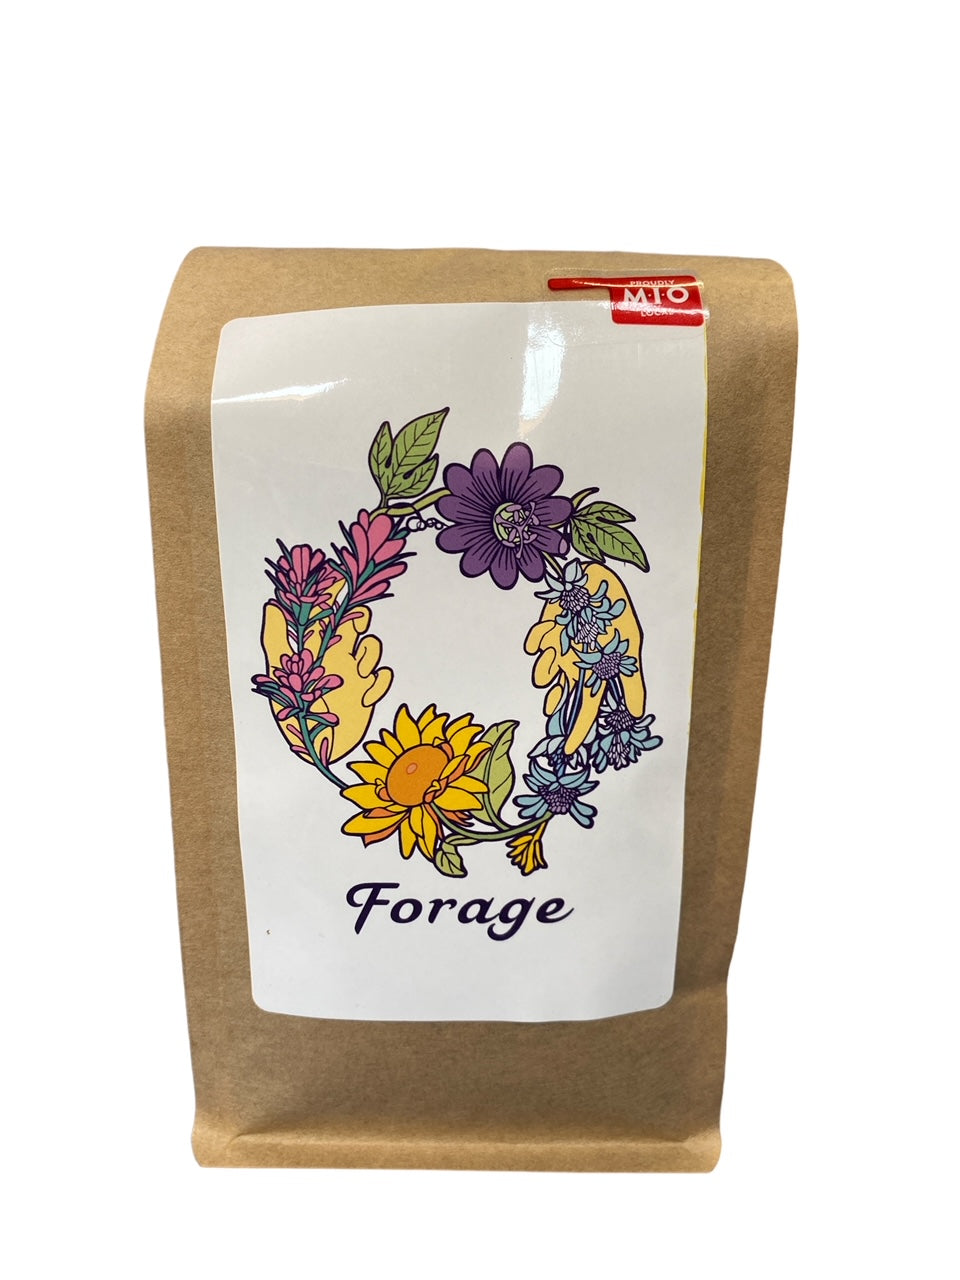 Forage Blend Artist Series Coffee